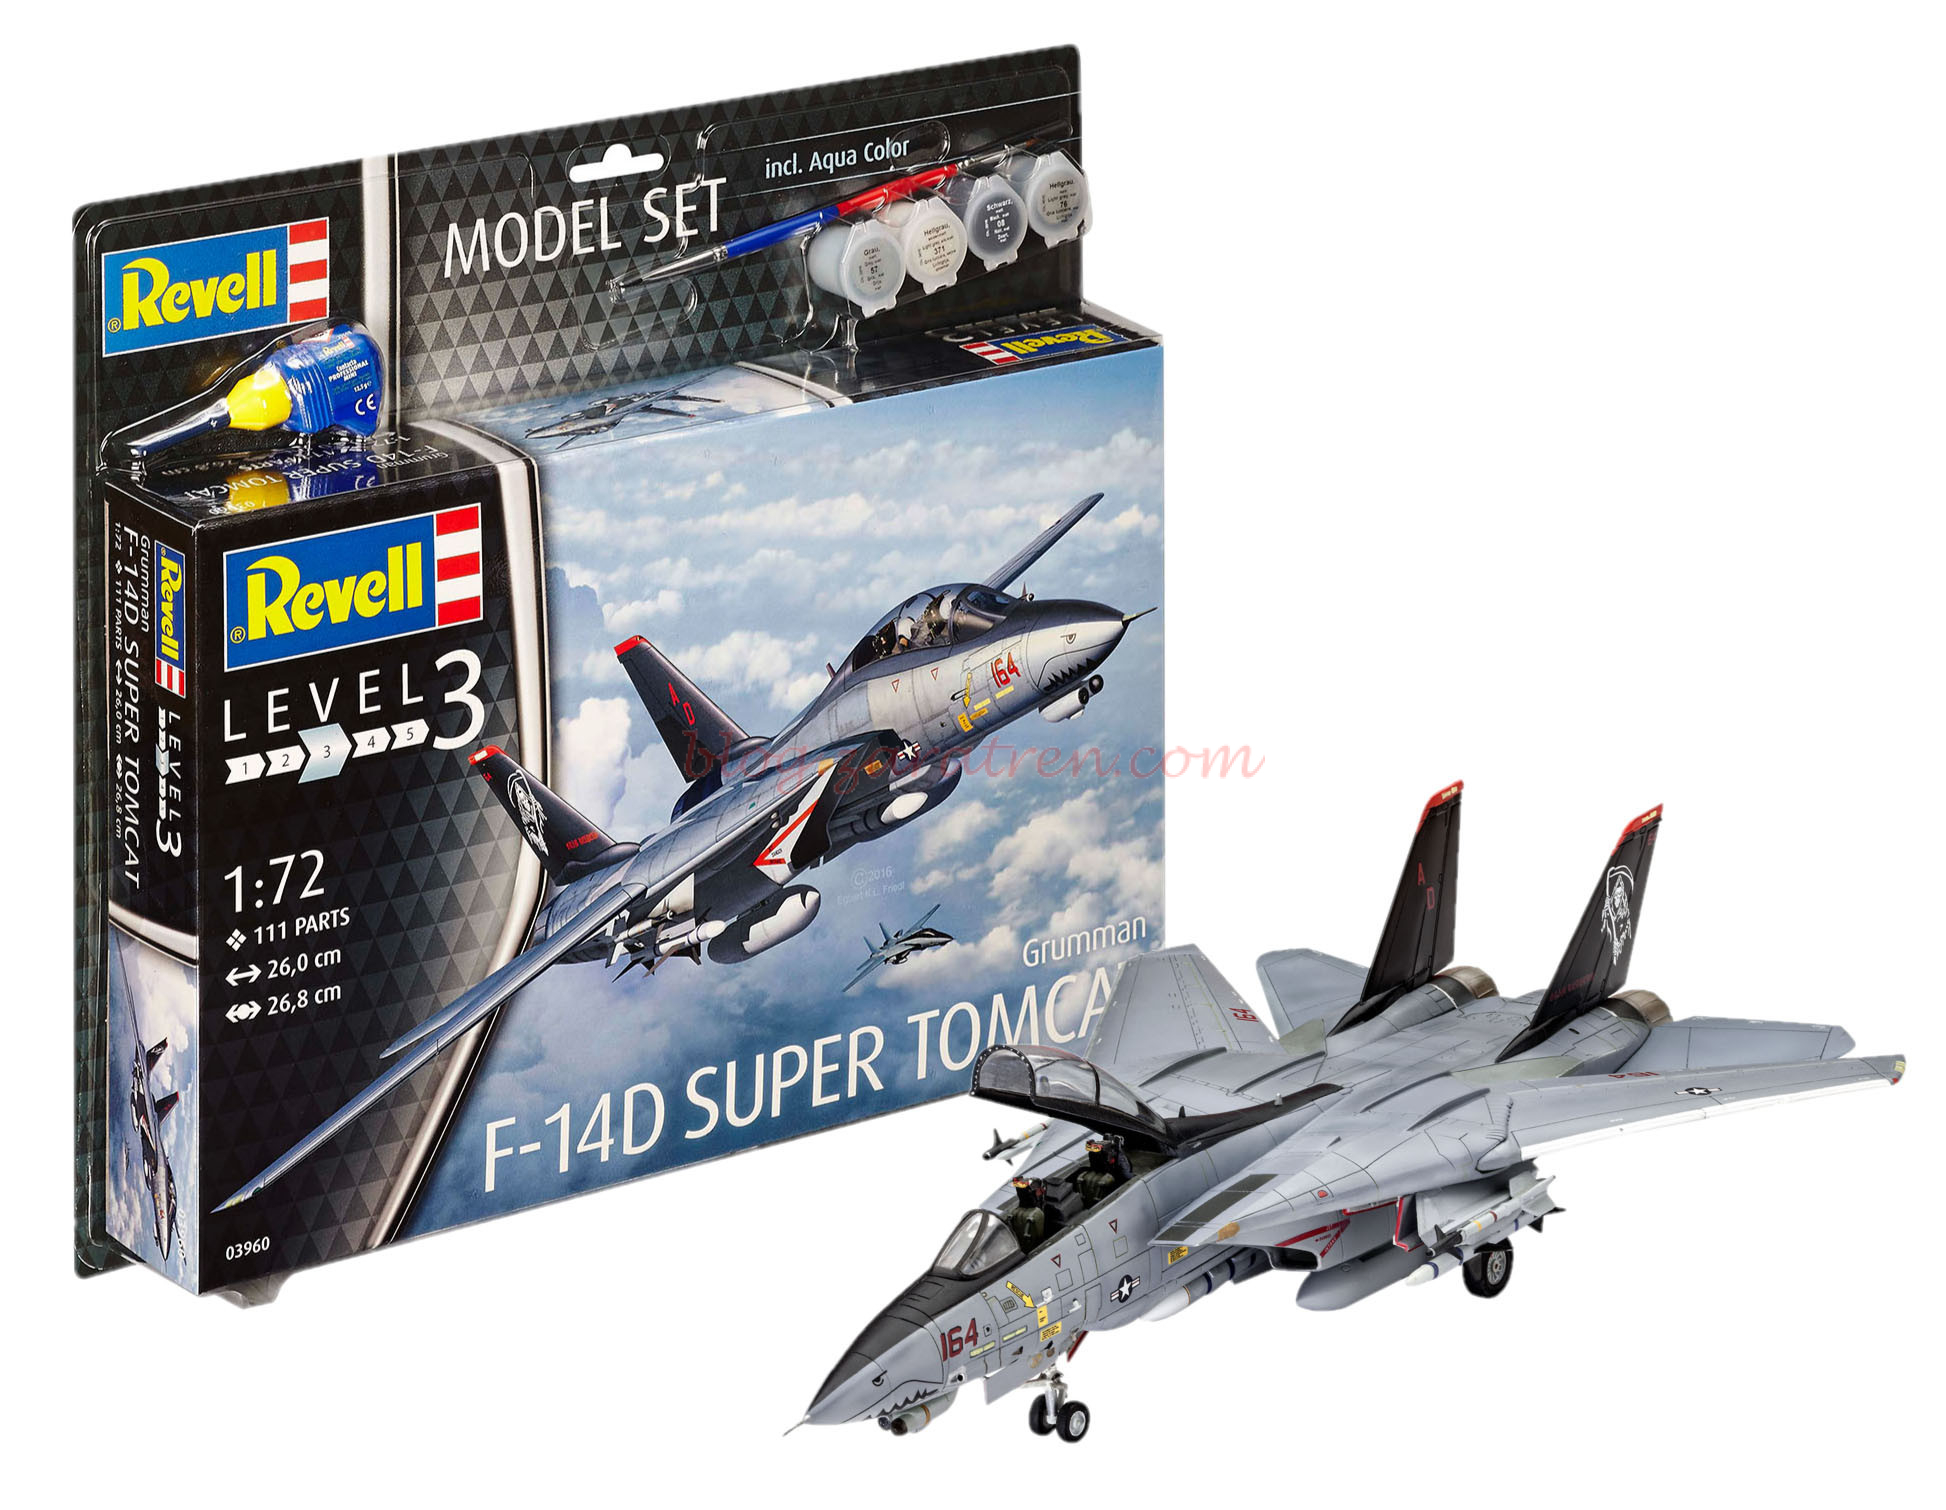 Revell – Avión F-14D Super Tomcat, Escala 1:72, Ref: 63960